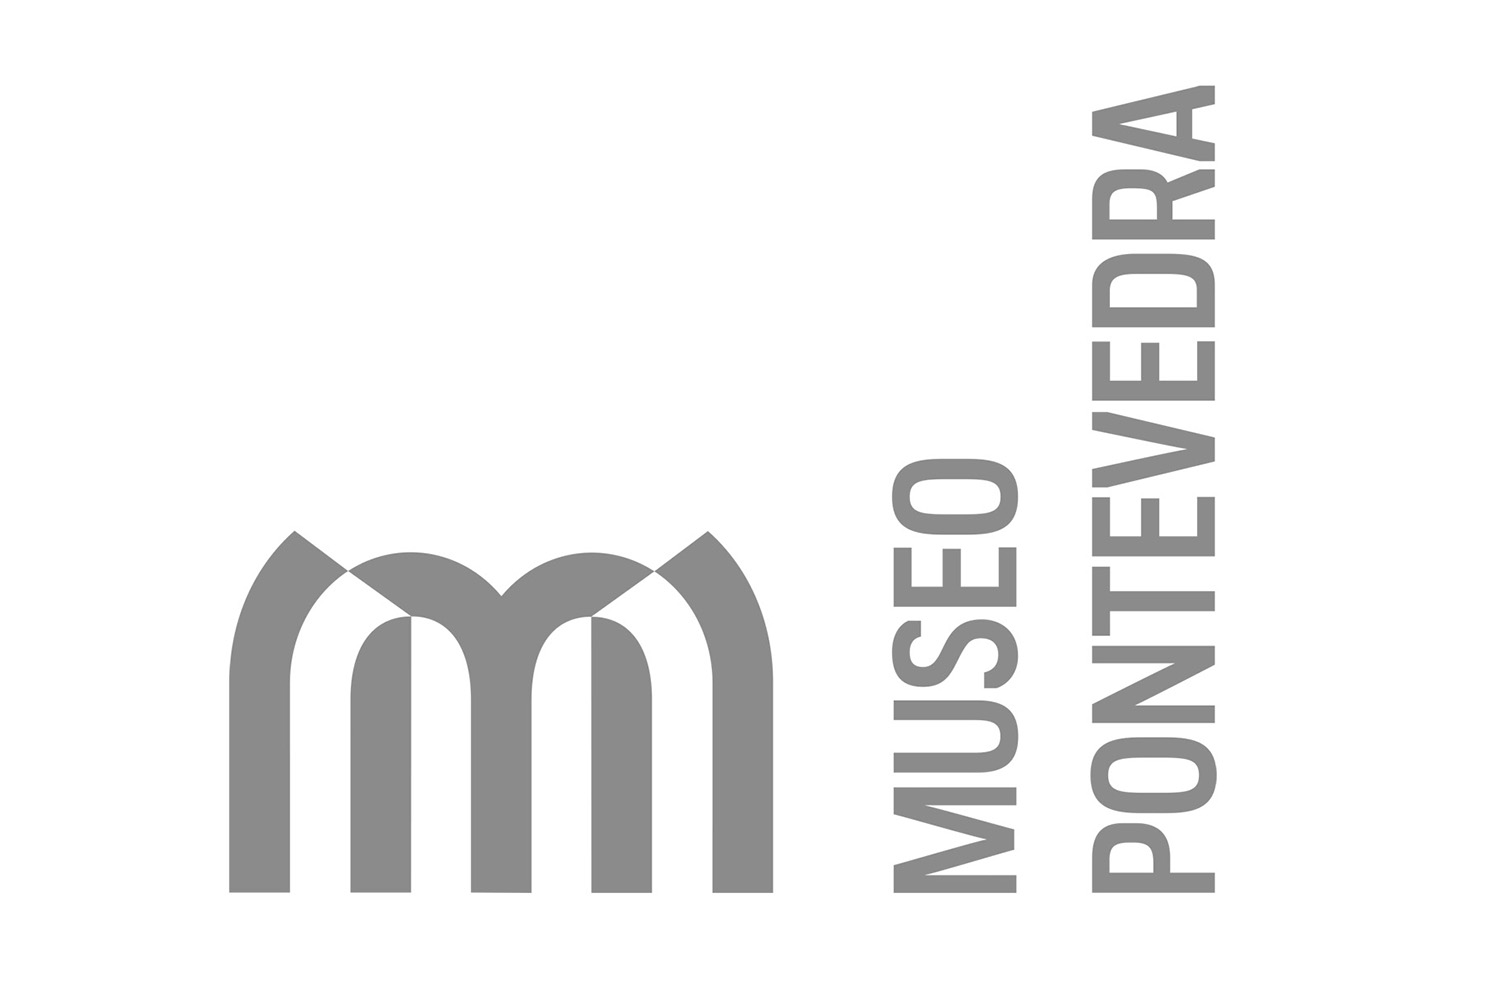 Museo Pontevedra by Uqui Permui Martinez - Creative Work - $i